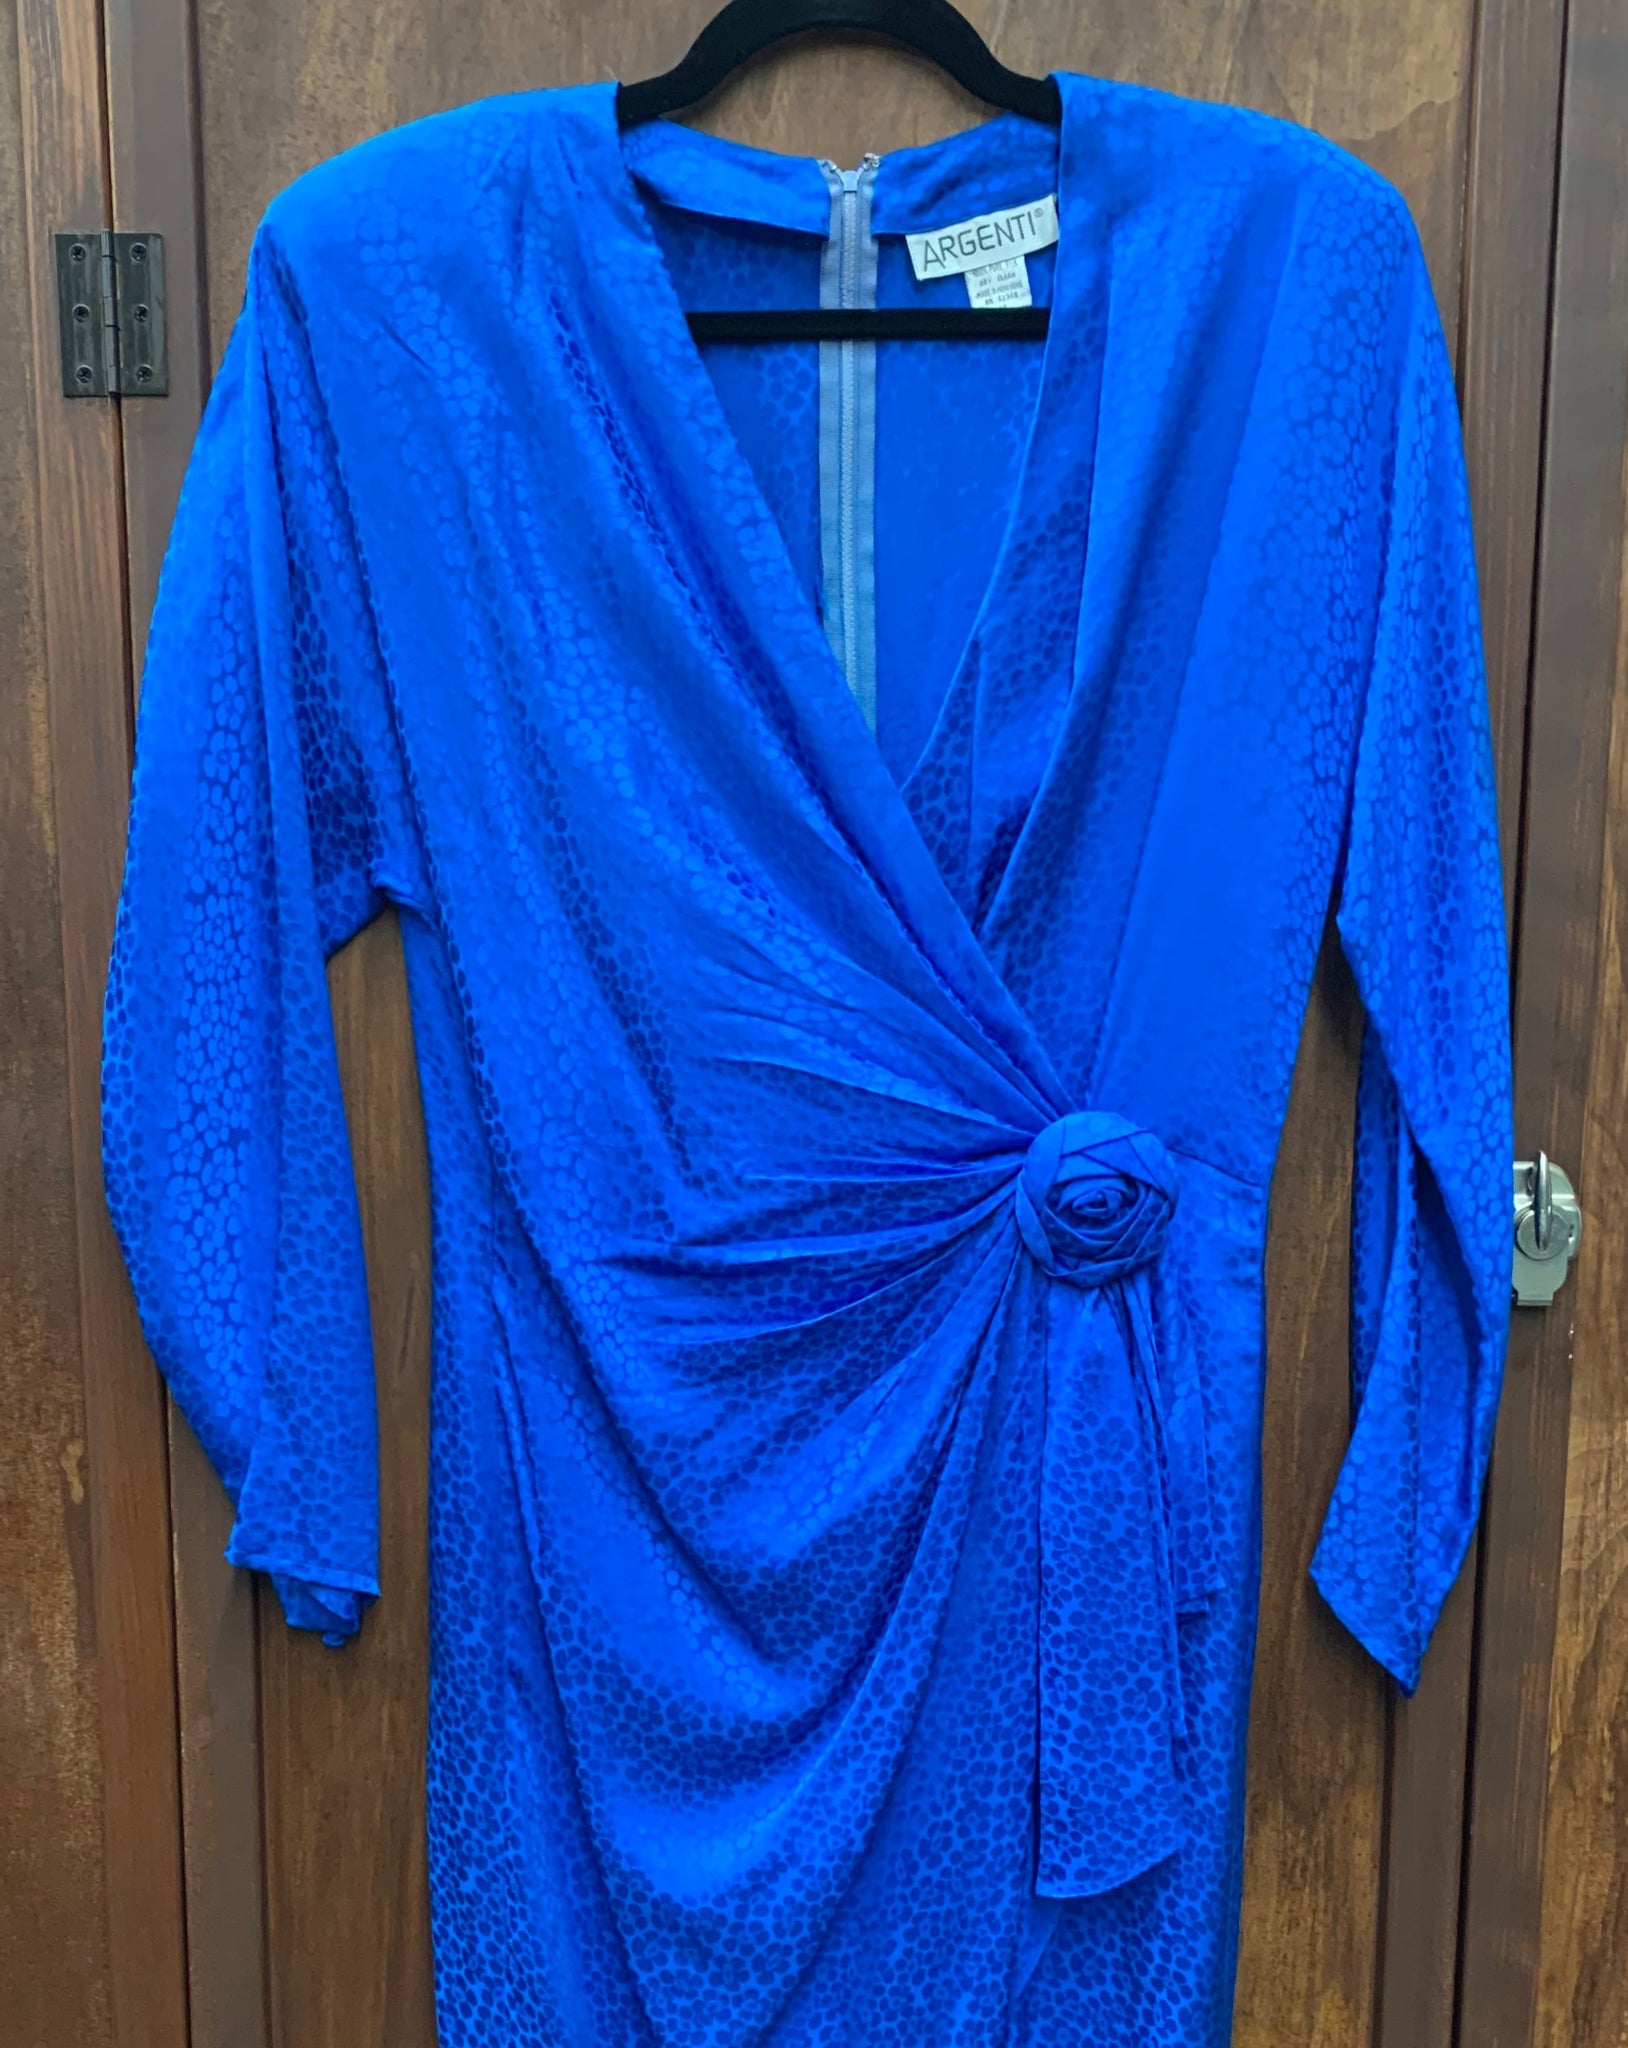 1980s DRESS- Argenti electric blue silk jaquard wrap